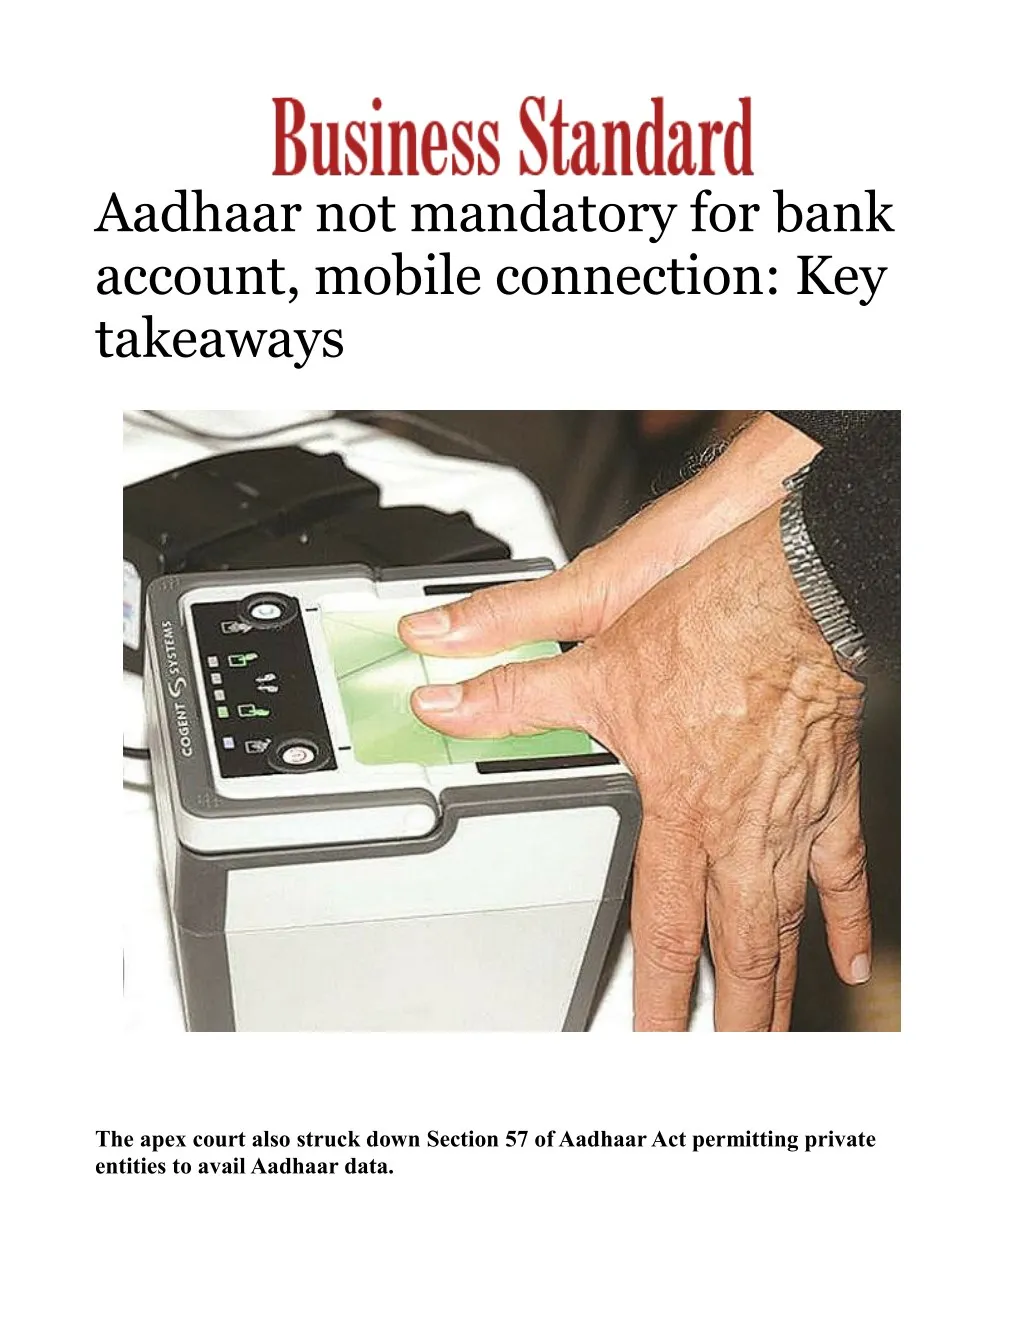 aadhaar not mandatory for bank account mobile